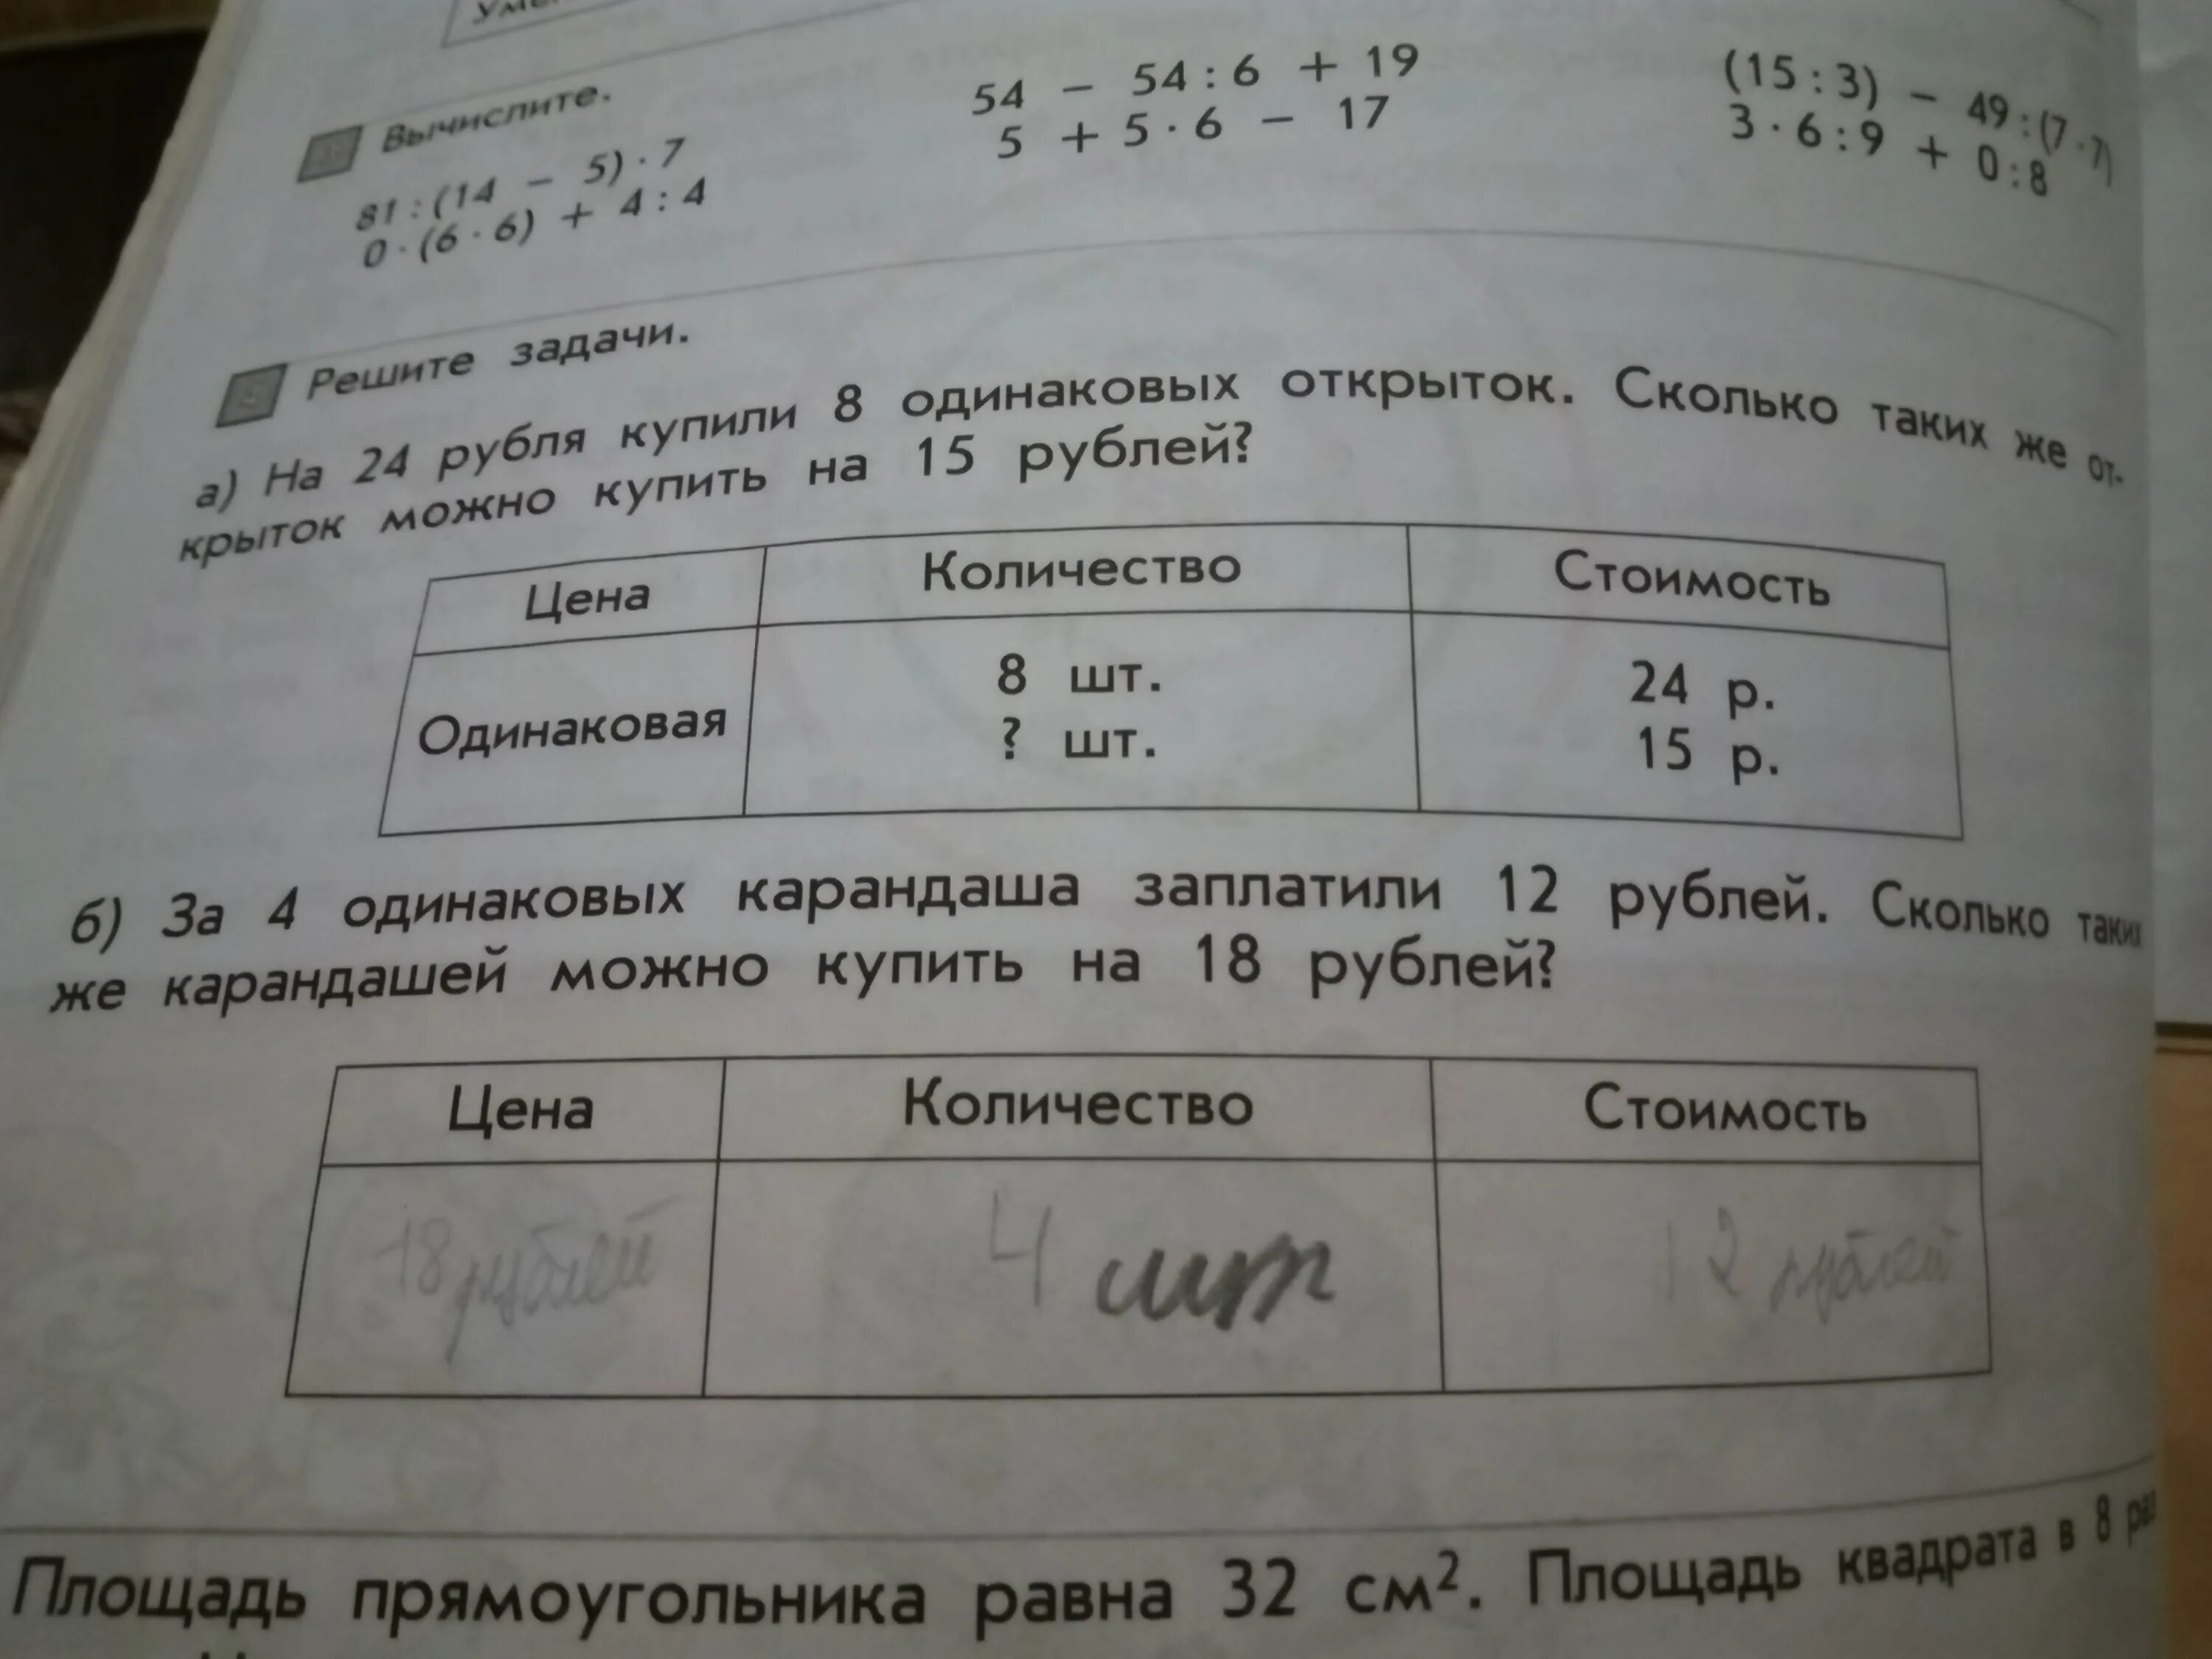 Купил 7 72. Условия задачи 8 карандашей. Соедини условия задач с их вопросами.. Решение задачи 8 карандашей стоят 24 рубля. Задача про рубль.